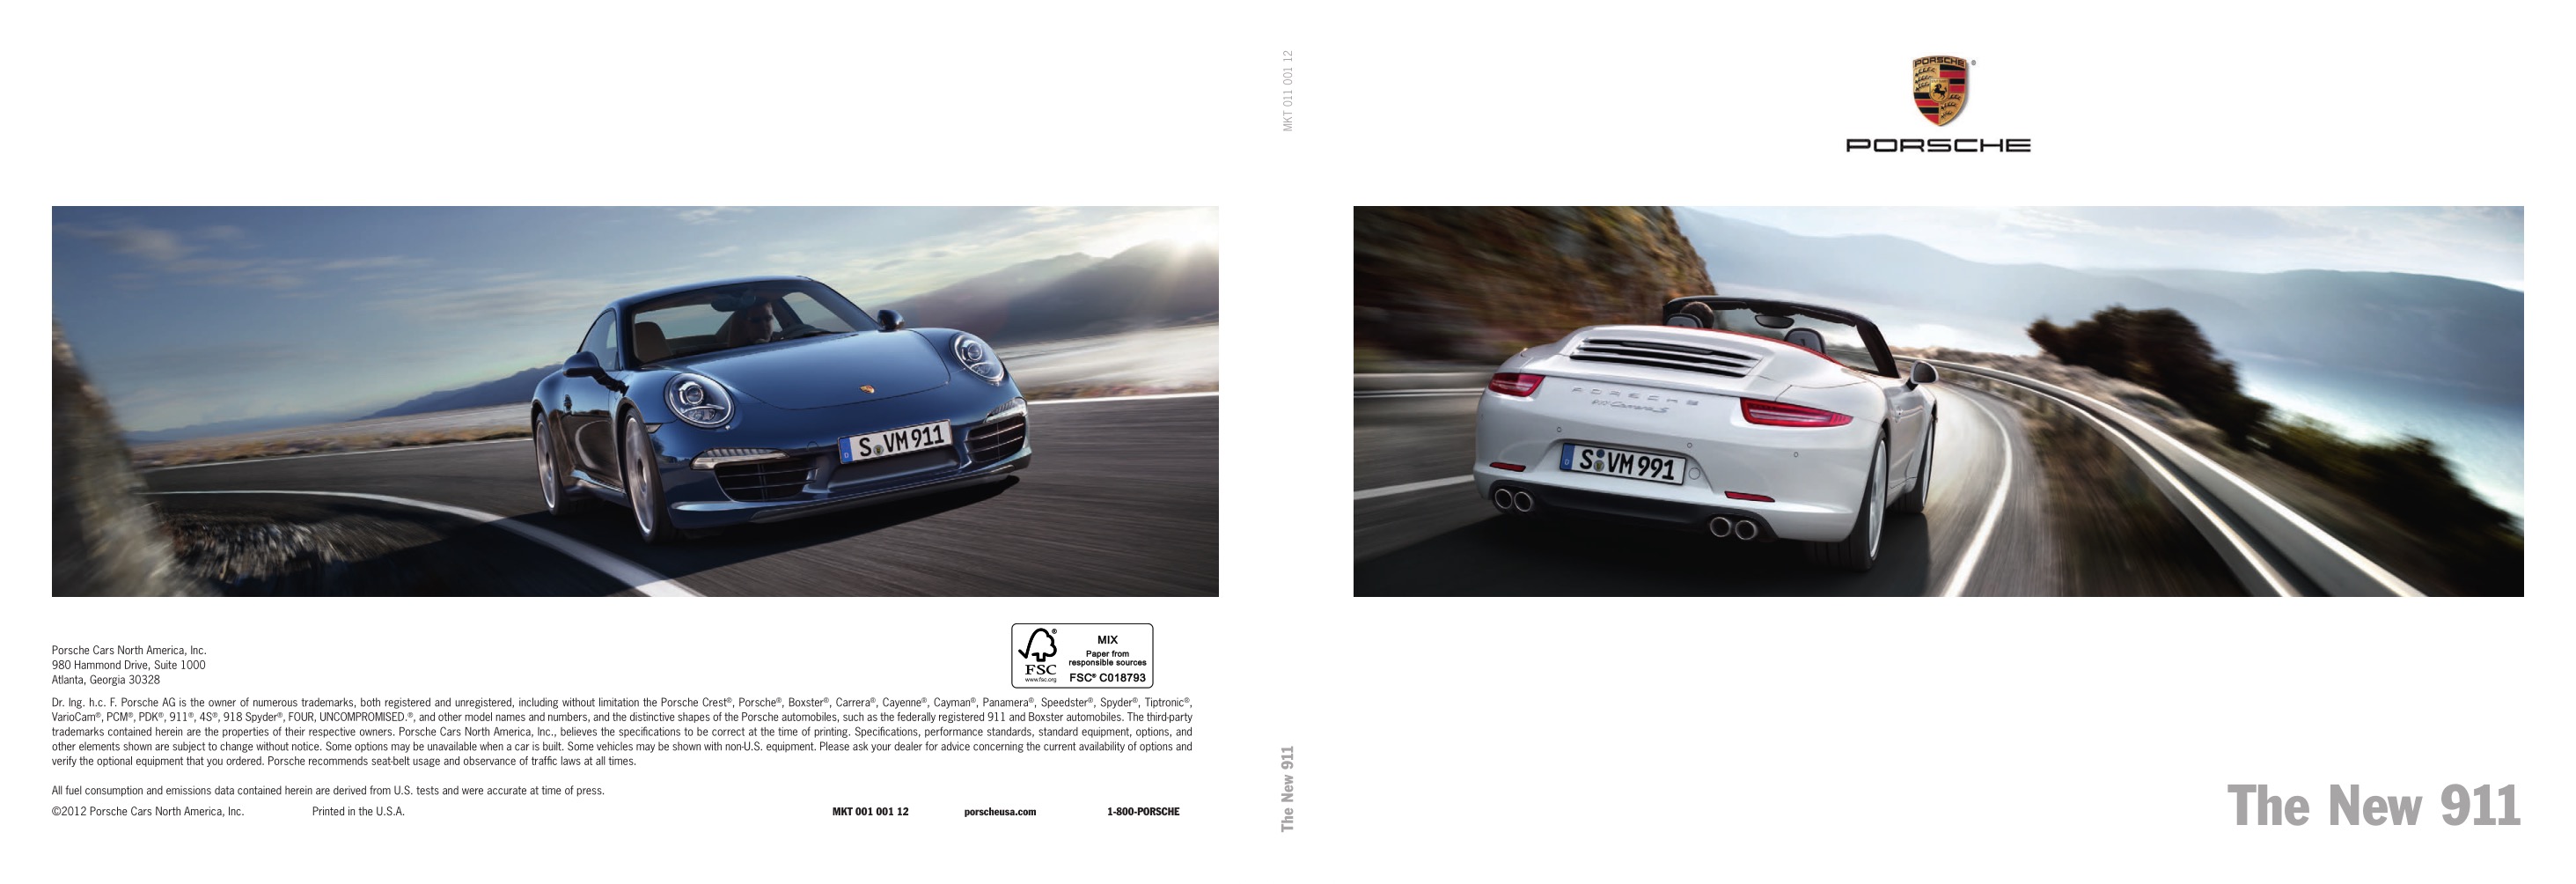 2012 Porsche 911 991 Brochure Page 21